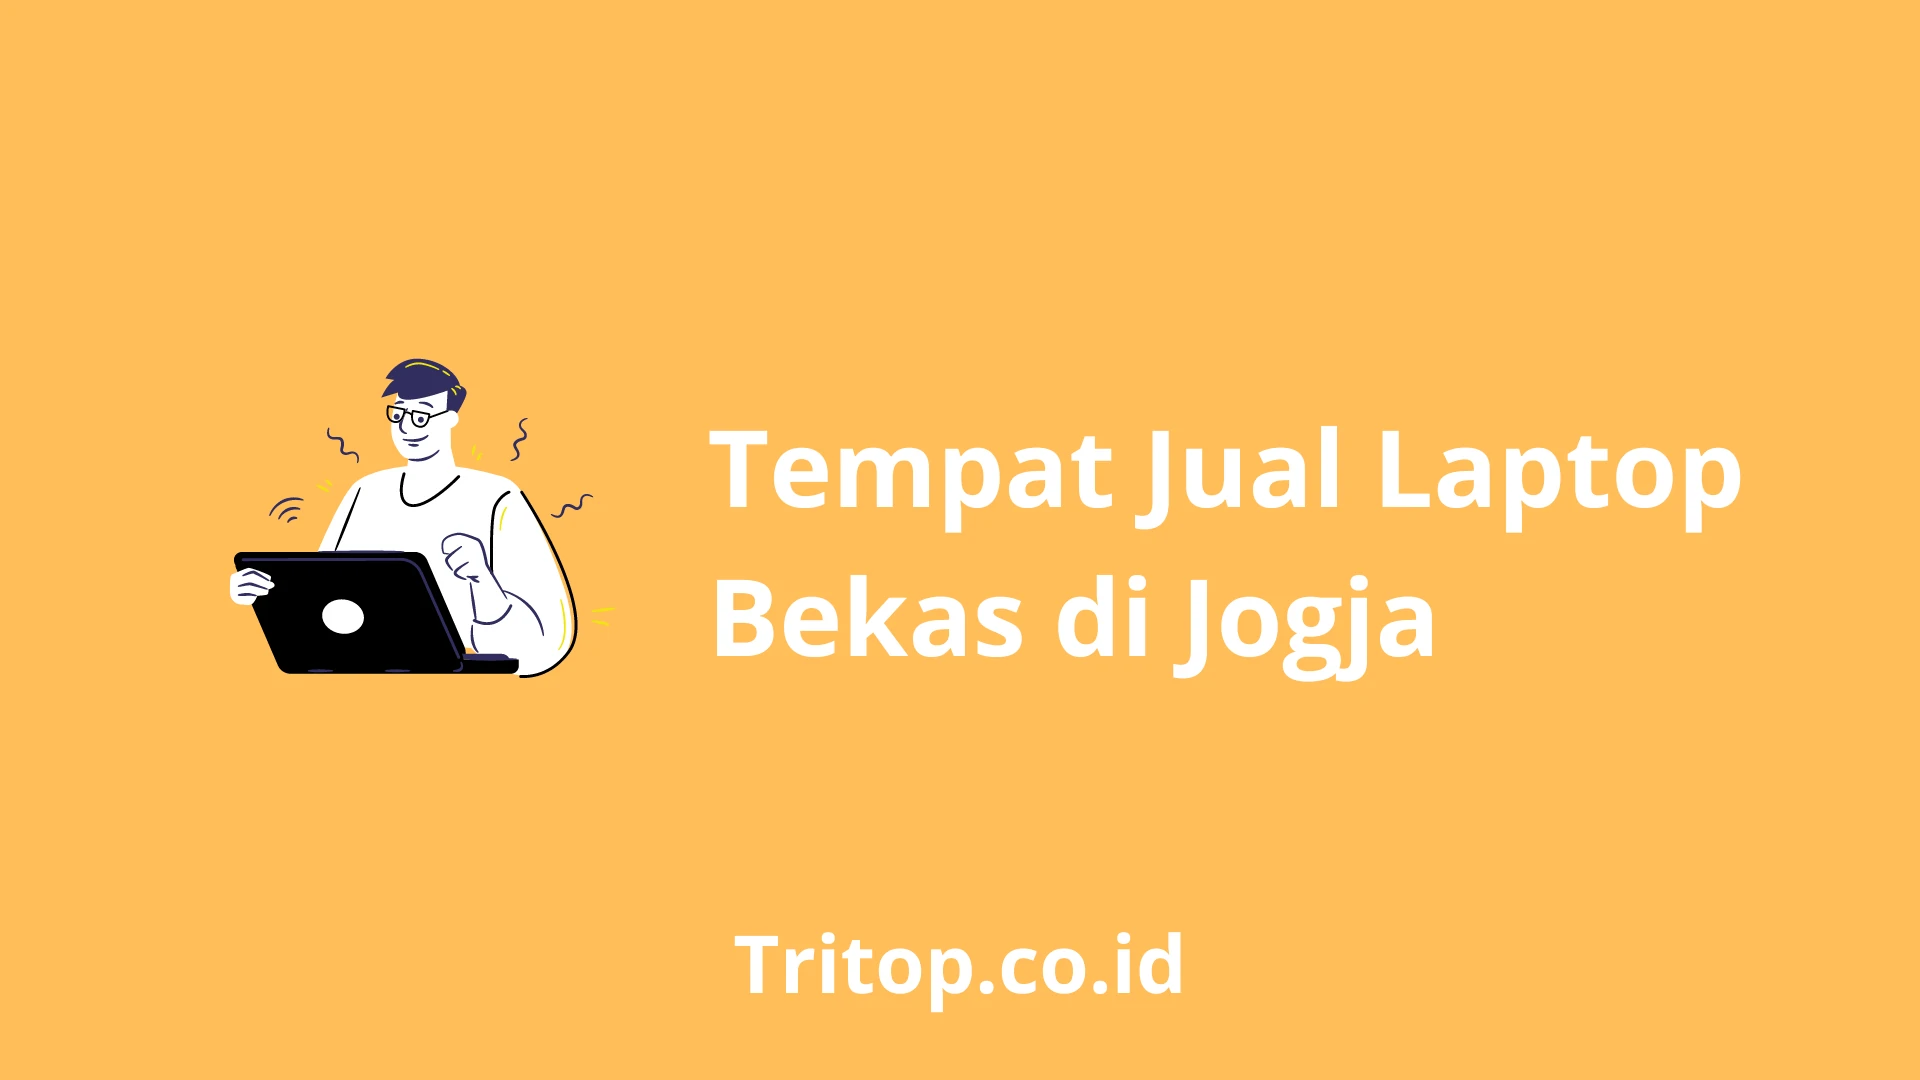 Tempat Jual Laptop Bekas jogja tritop.co.id